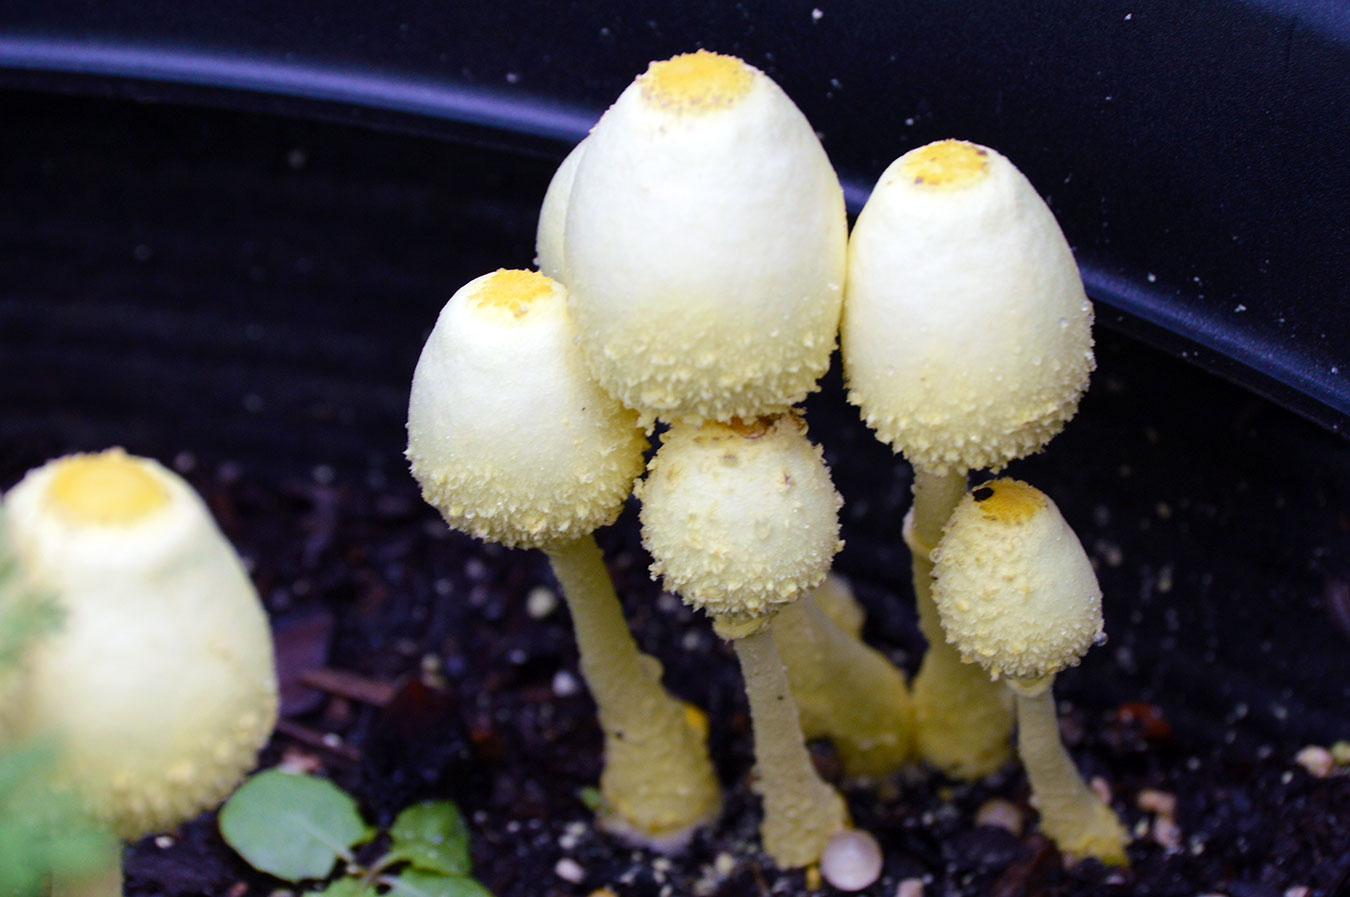 Yellow fungus potting soil the yellow houseplant mushroom